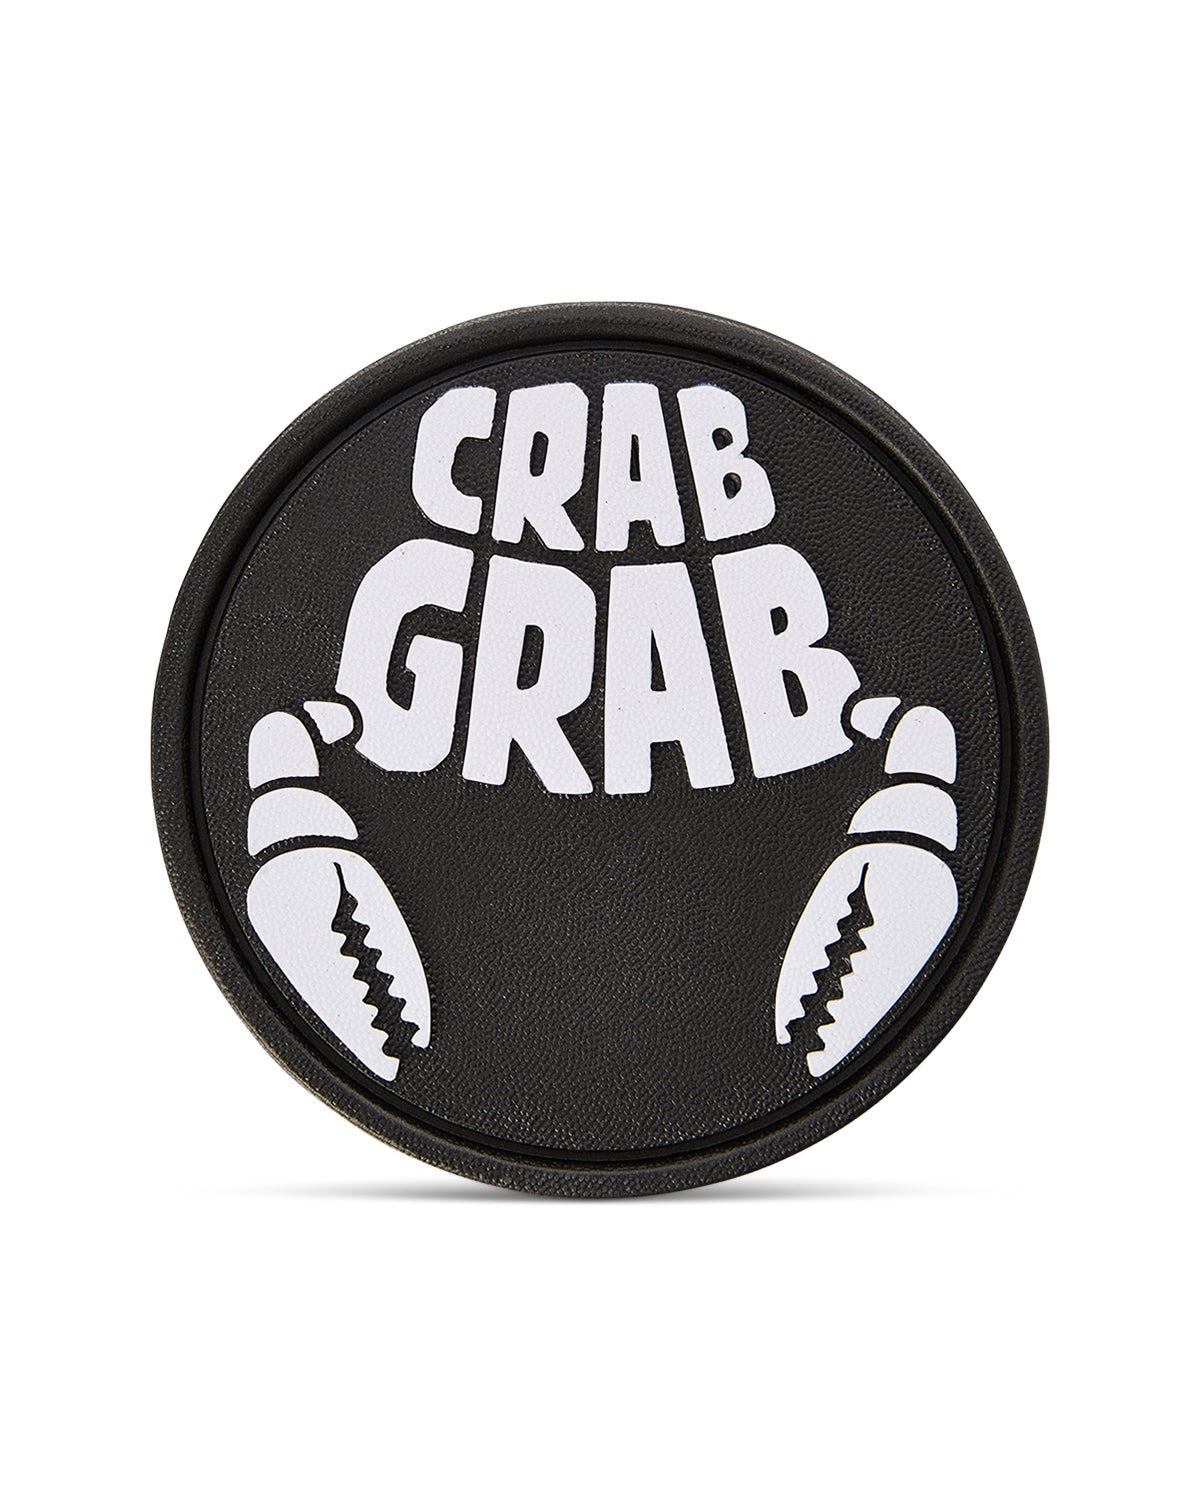 grip-pad-snowboard-logo-crab-grab-DM2-SHOP-02